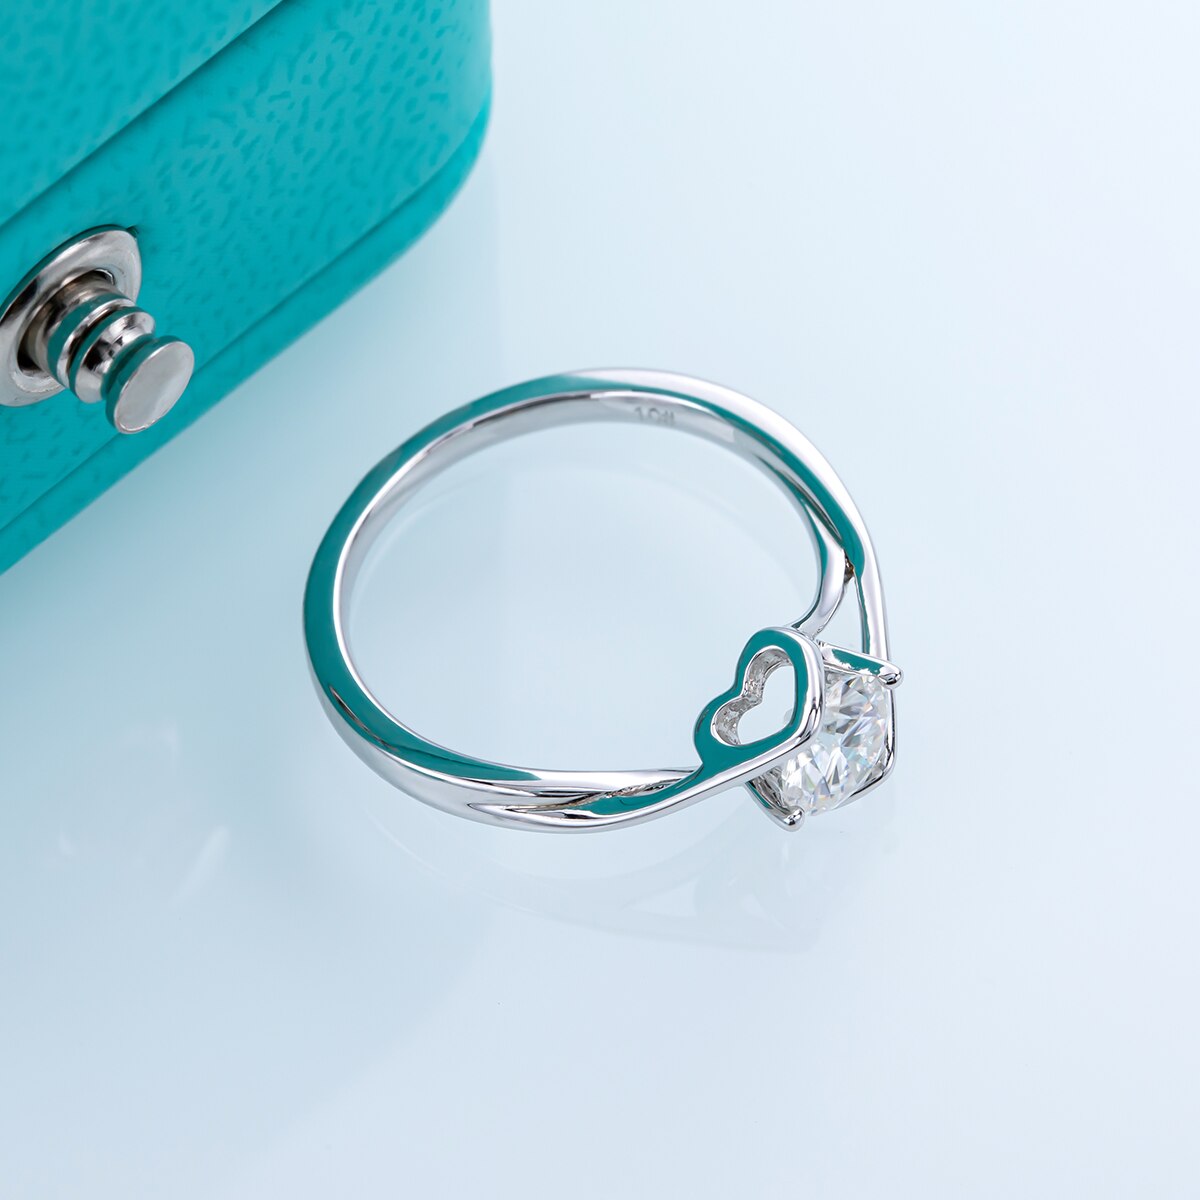 Holloway Jewellery Moissanite Diamond Engagement Ring